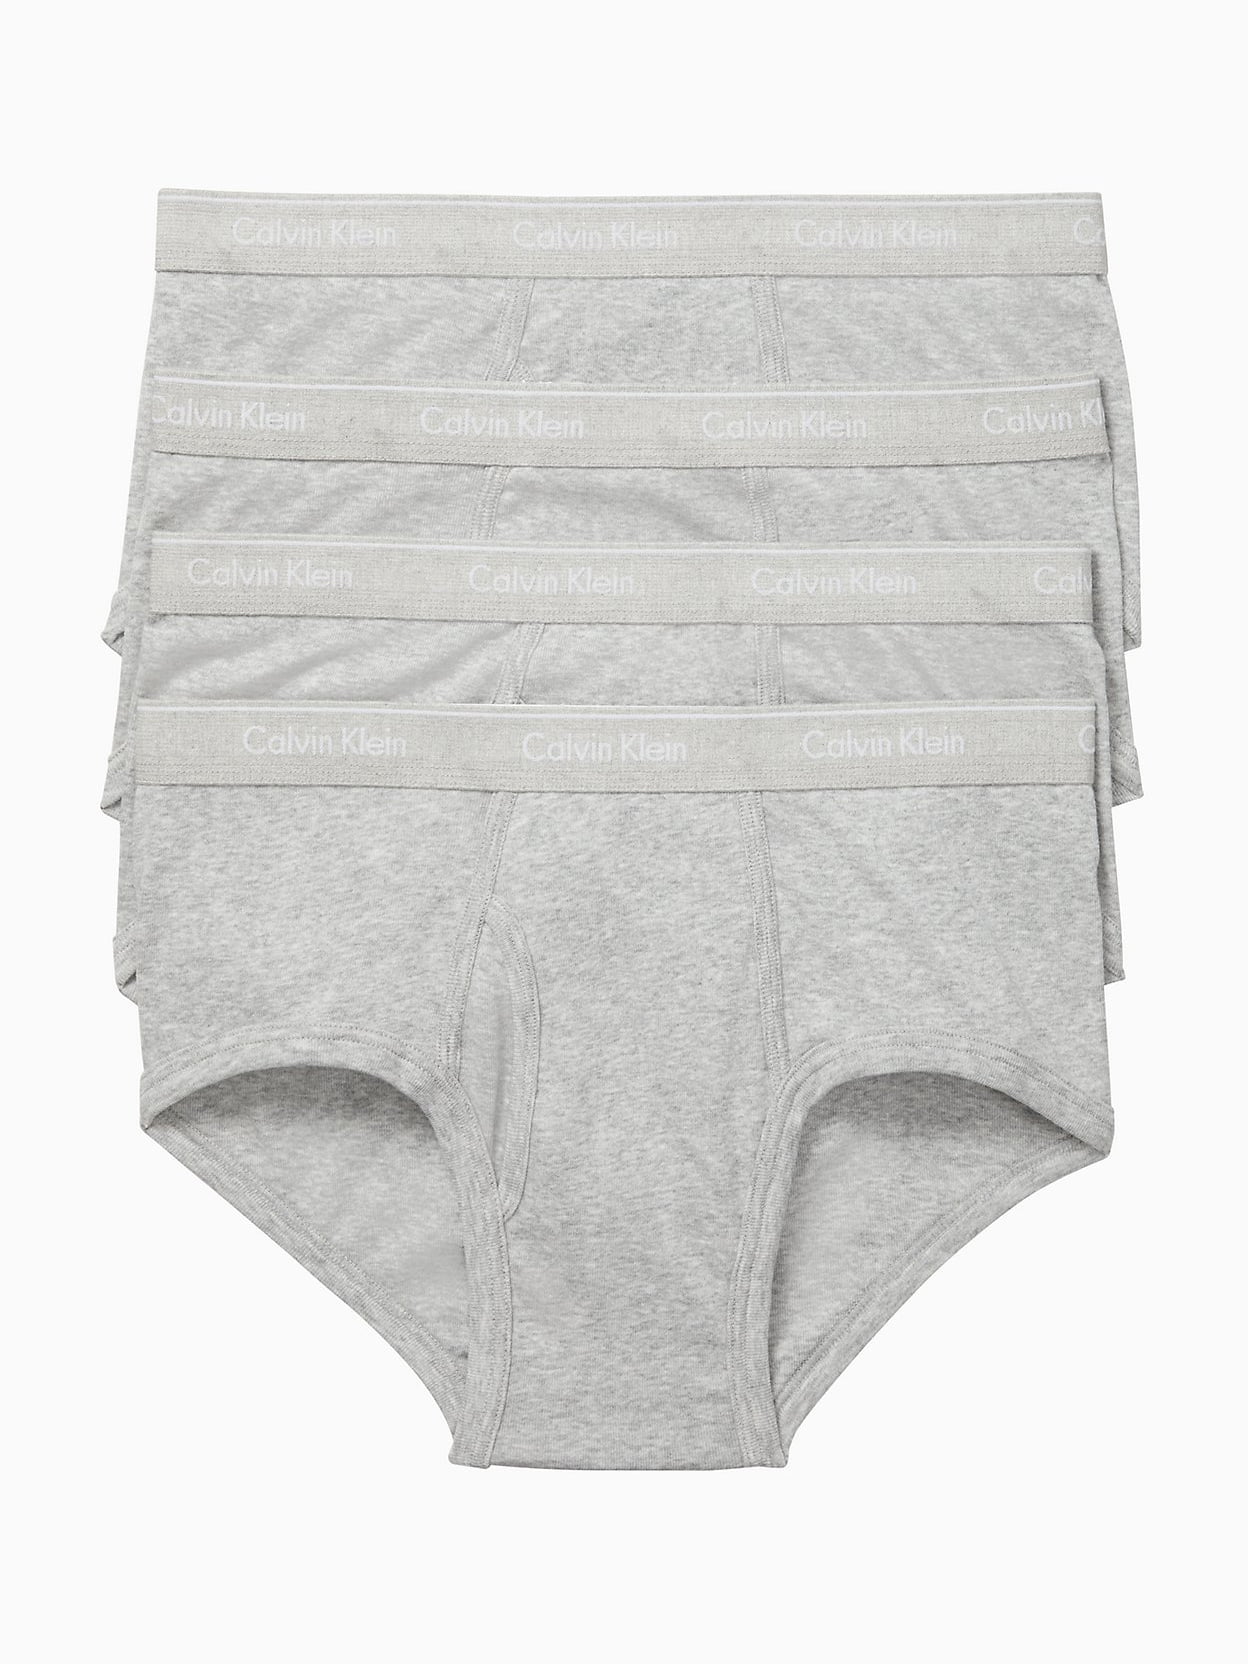 Buy Men's Calvin Klein Grey Underwear Online